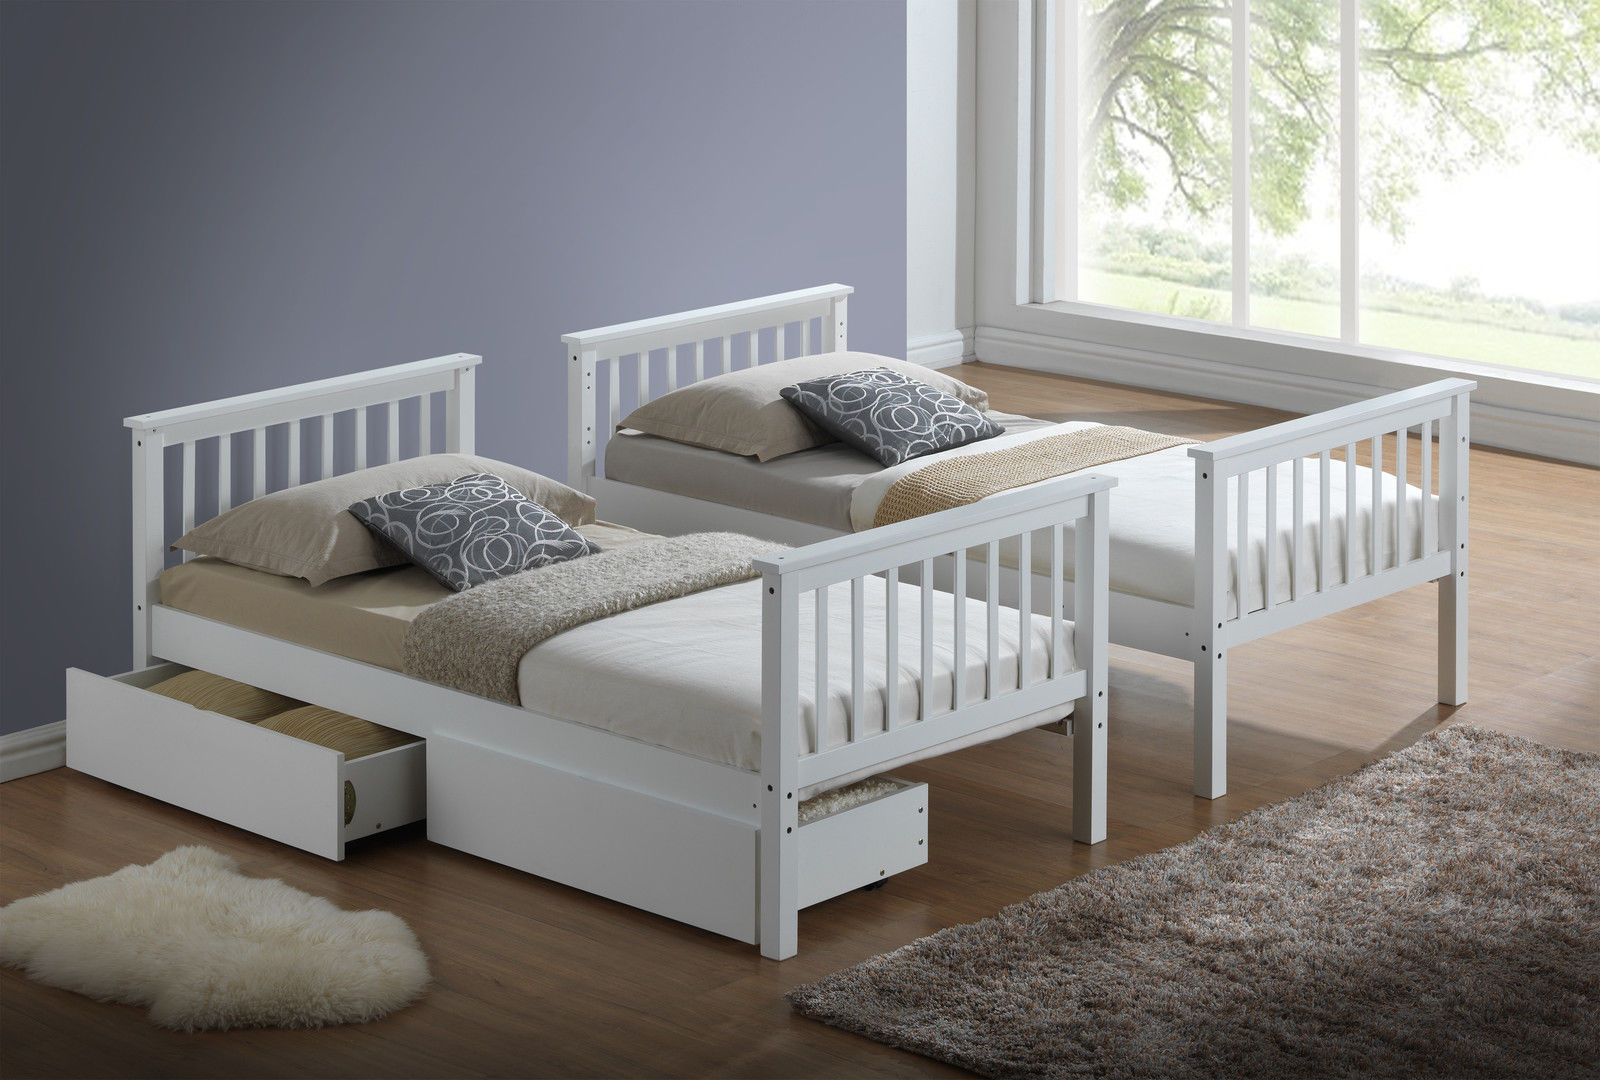 children's beds and mattresses